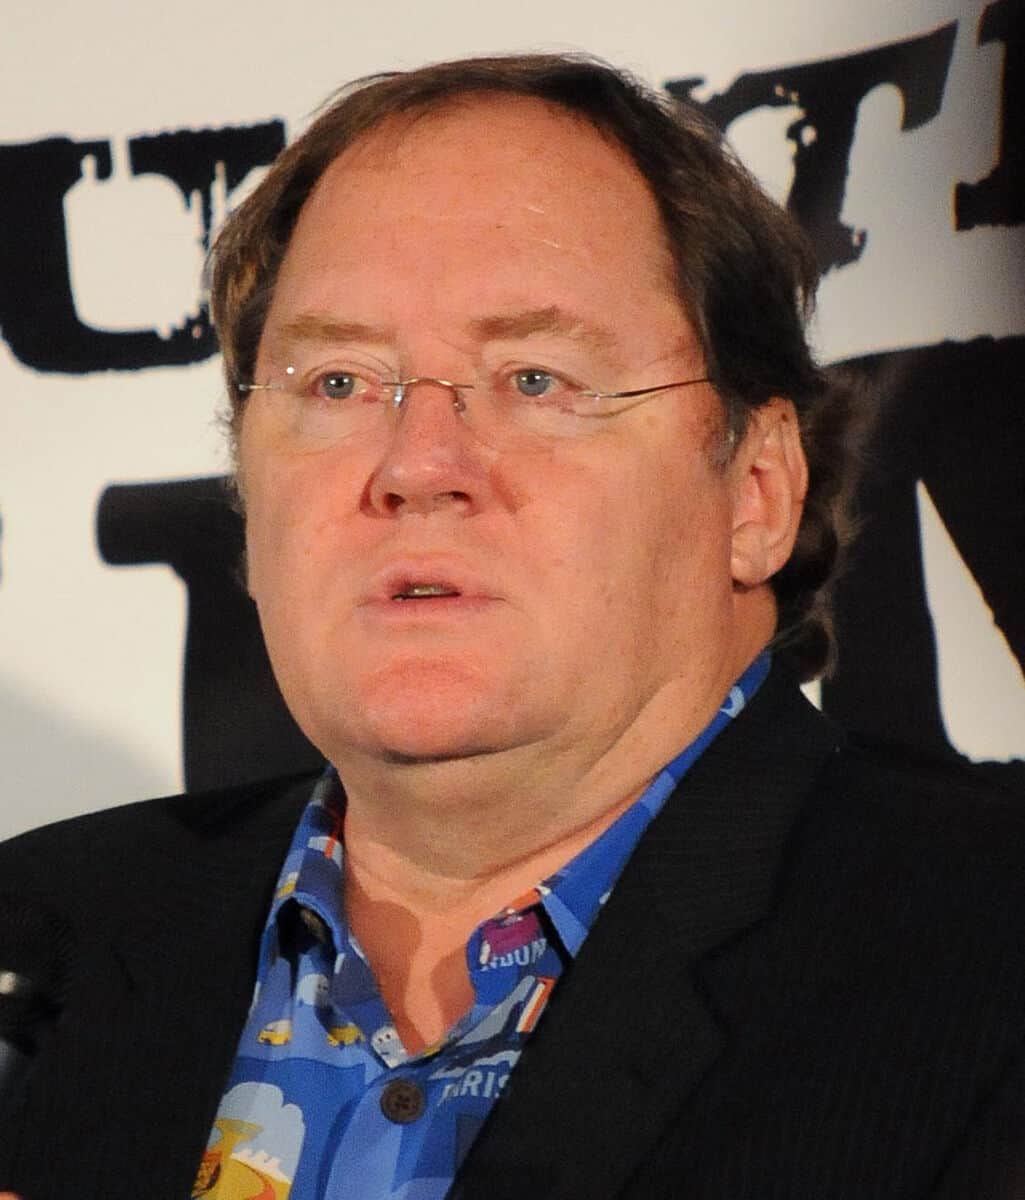 John Lasseter - Famous Animator